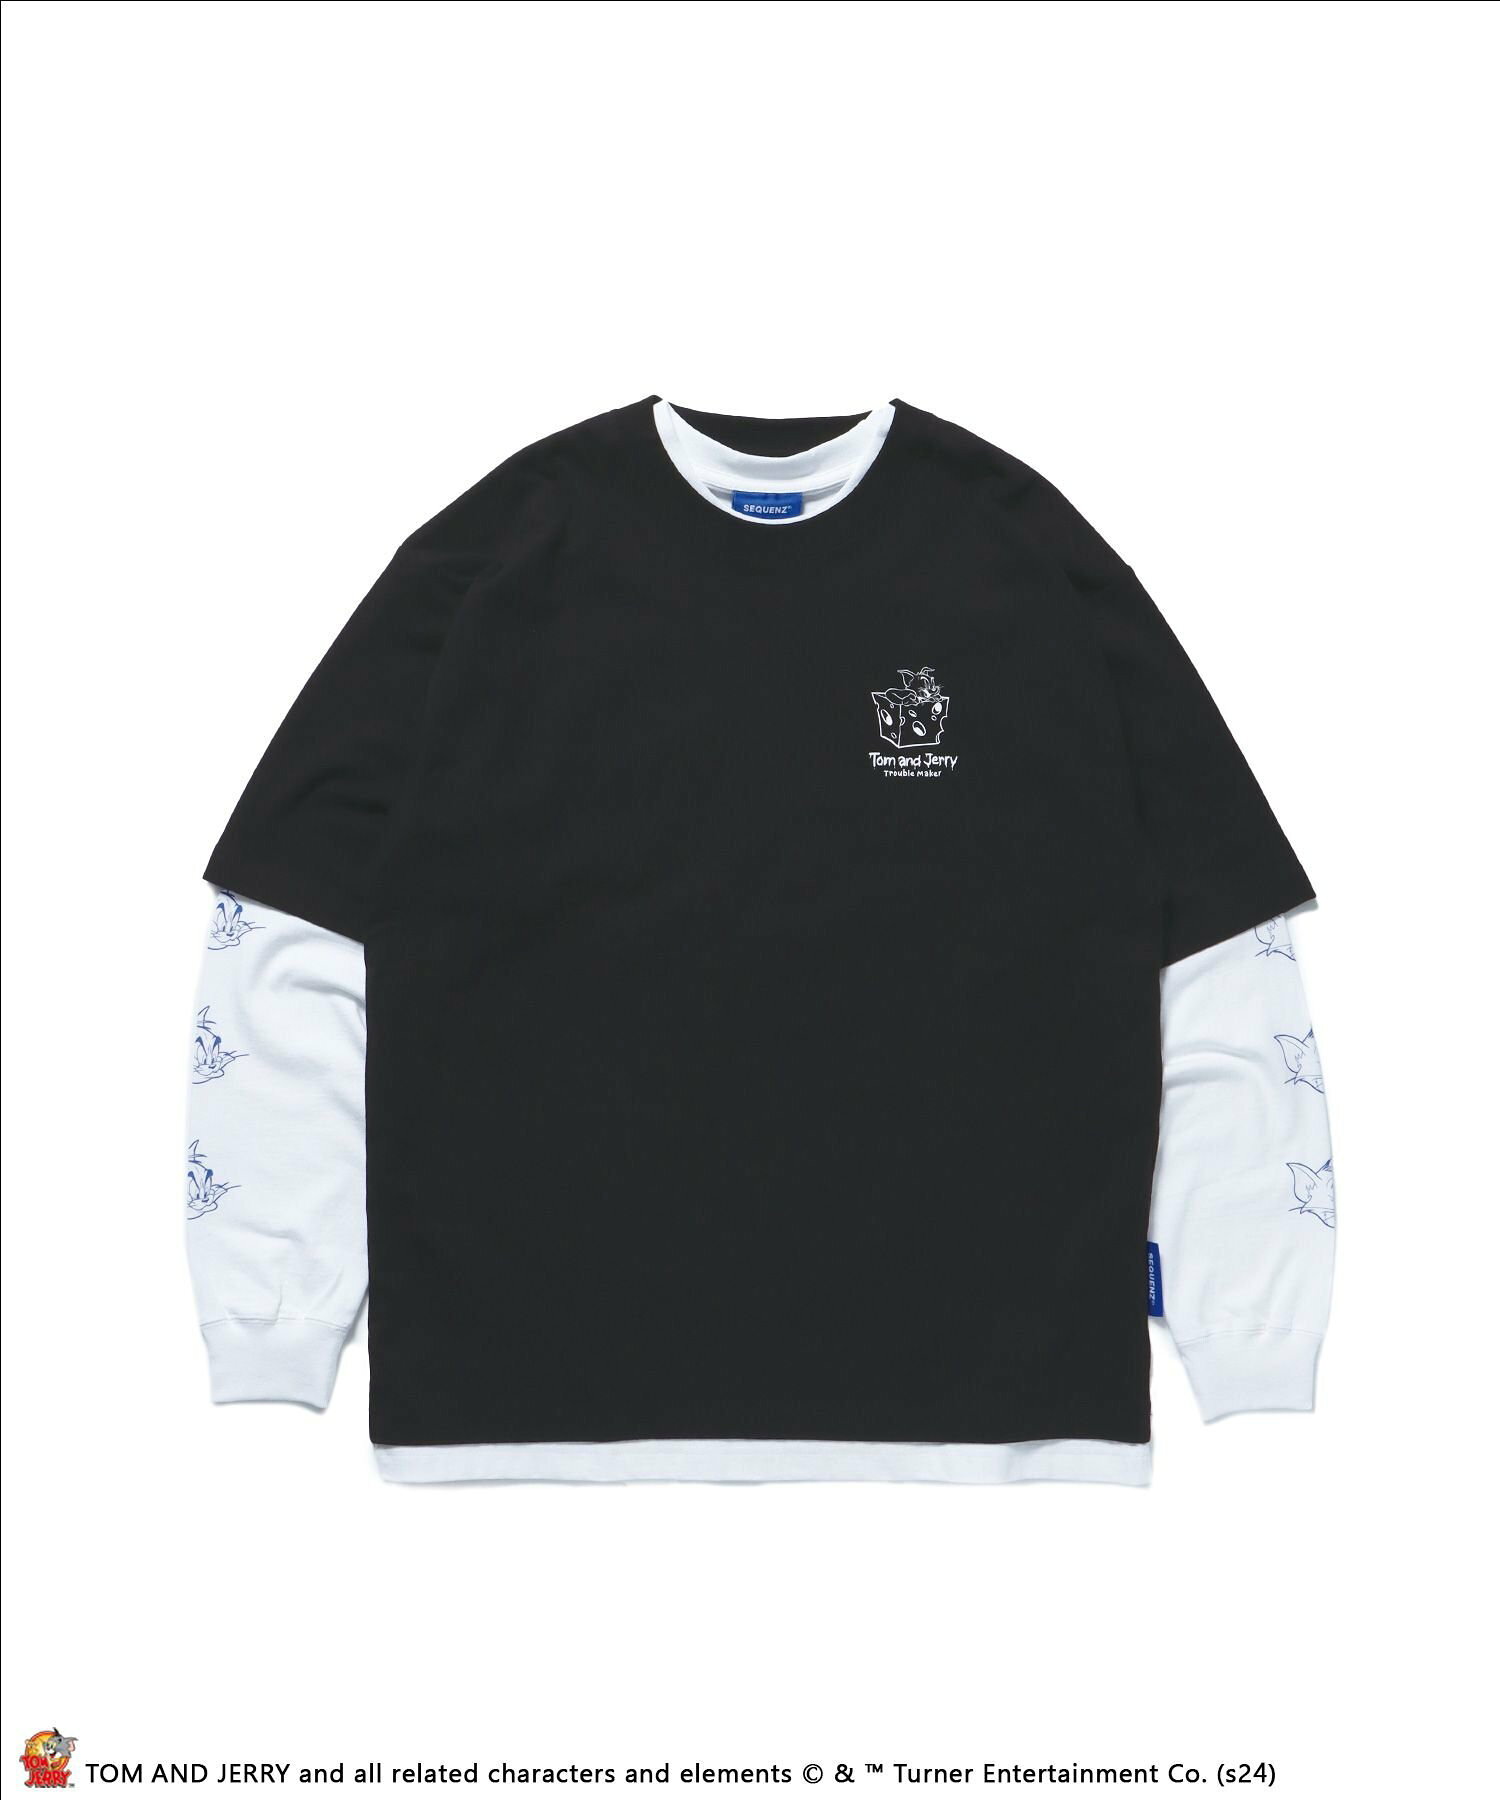 【SEQUENZ】TJ CHEESE TEE LAYERED / 半袖Tシャツ ロンT 2枚セット ワンポイント バックプリント モノトーン